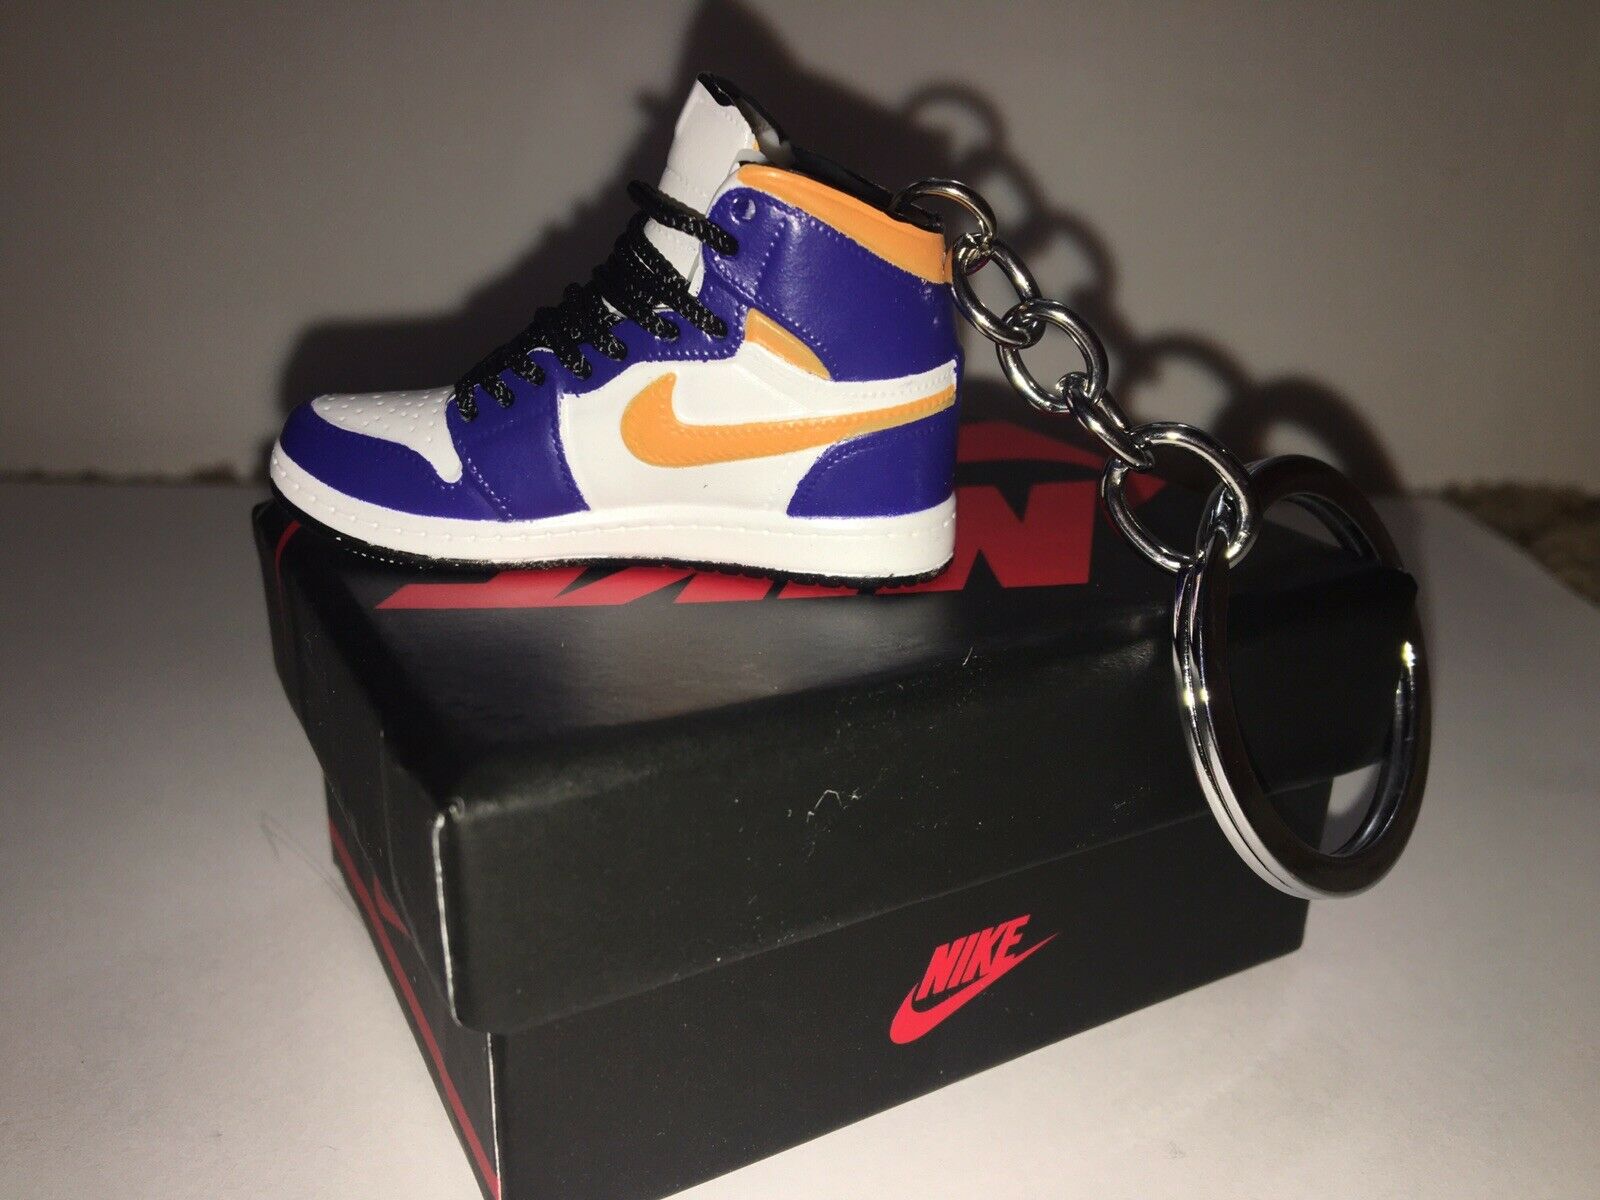 New Mini 3D AIR JORDAN Nike sneaker shoes keychain With Box. Purple/gold